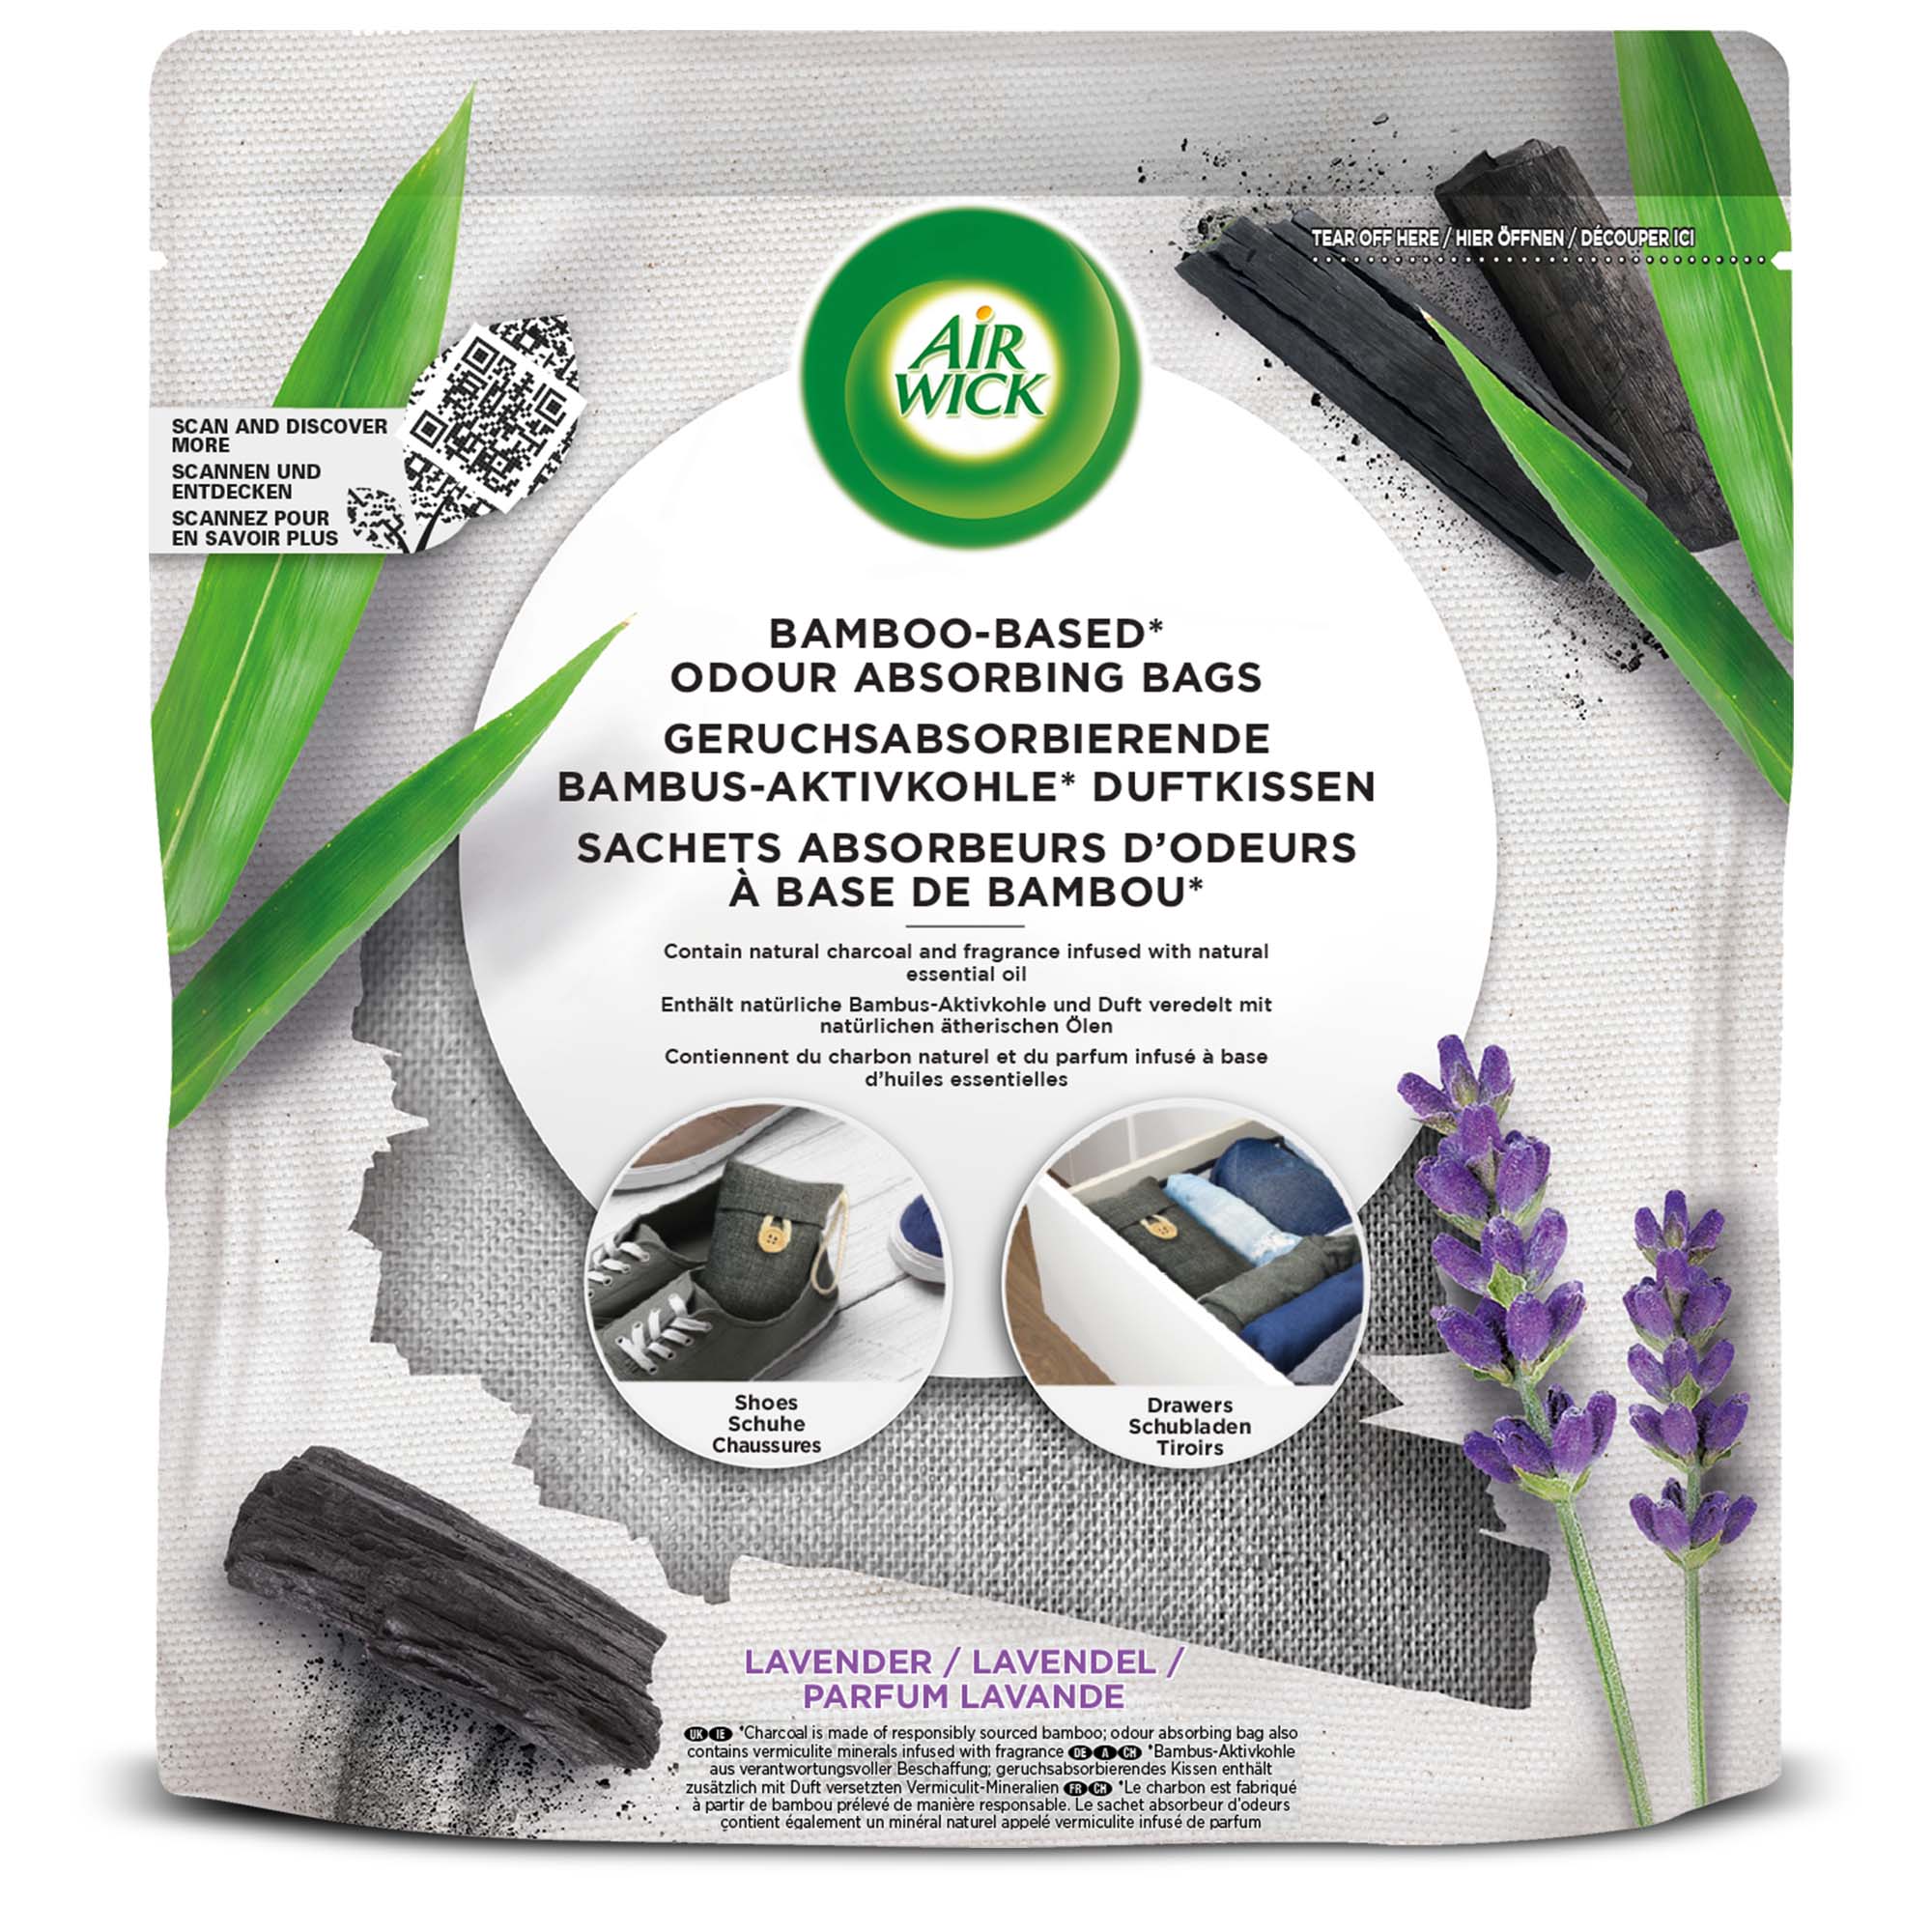 Air Wick geruchsabsorbierende Bambus-Aktivkohle Duftkissen Lavendel